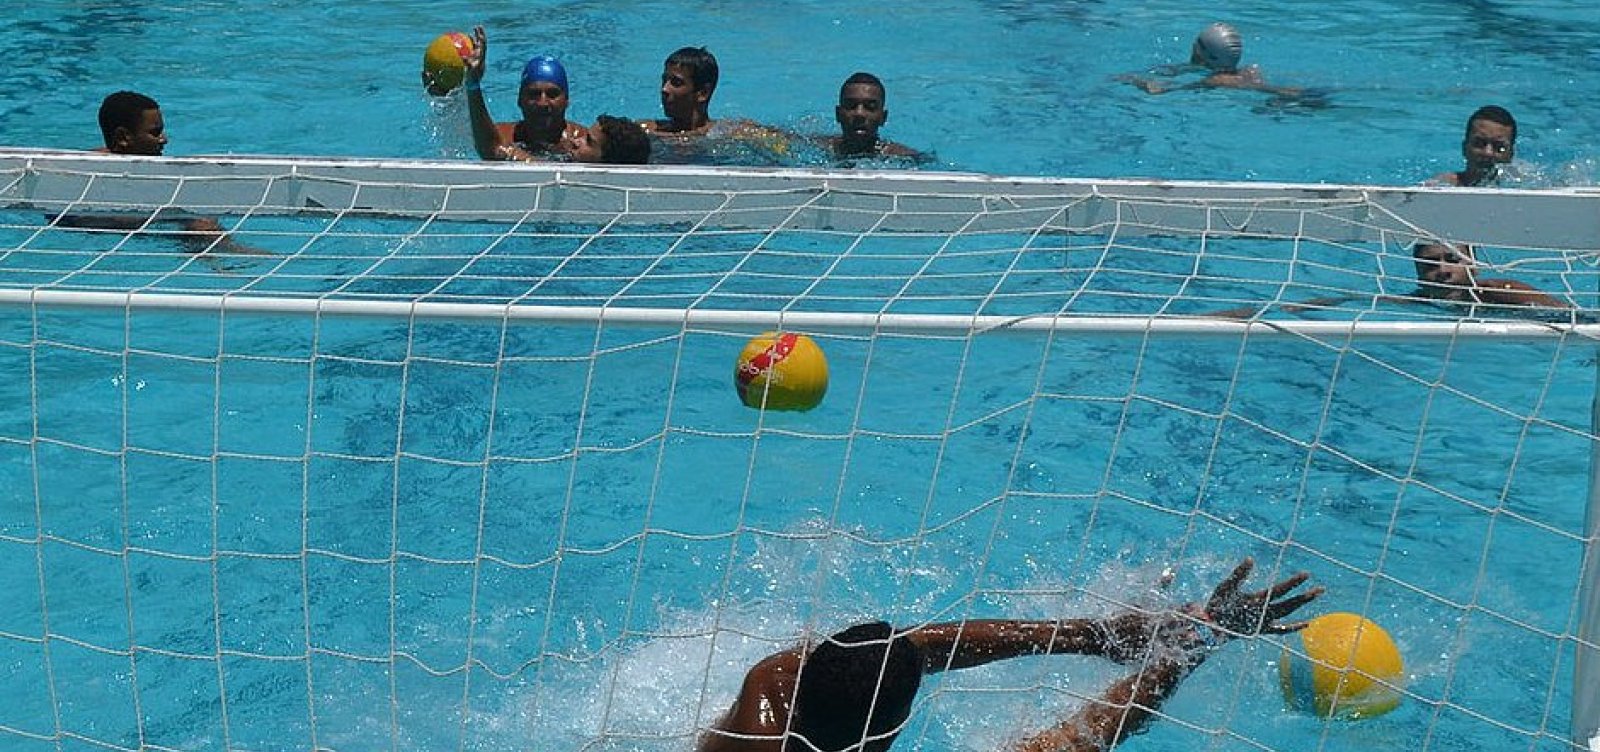 Sudesb oferece 460 vagas para aulas gratuitas de esportes na piscina e no mar